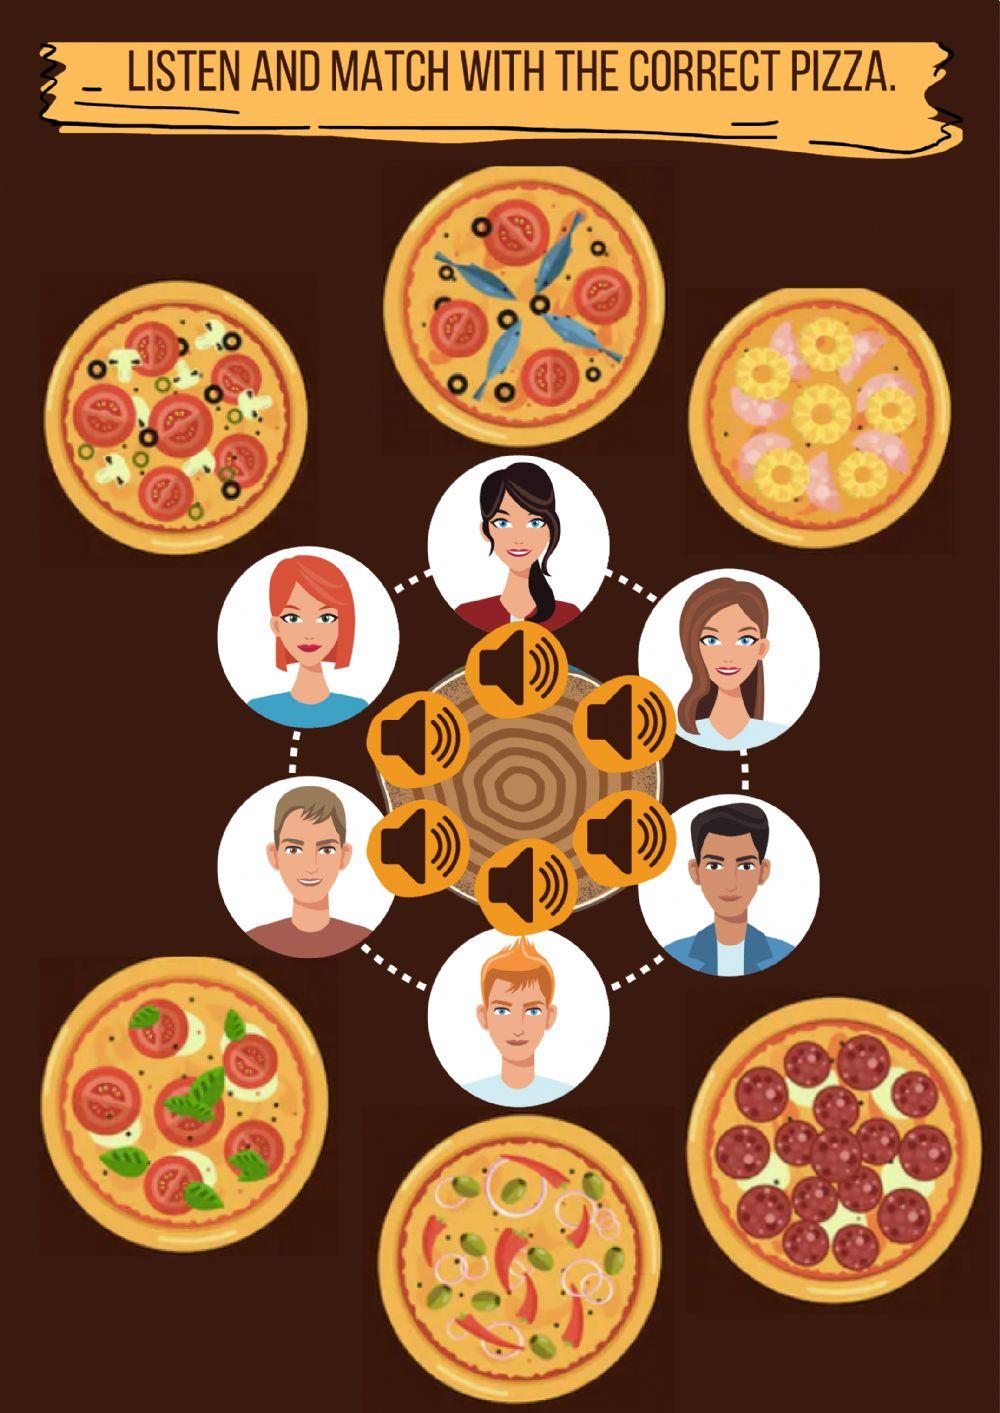 Choose the correct pizza